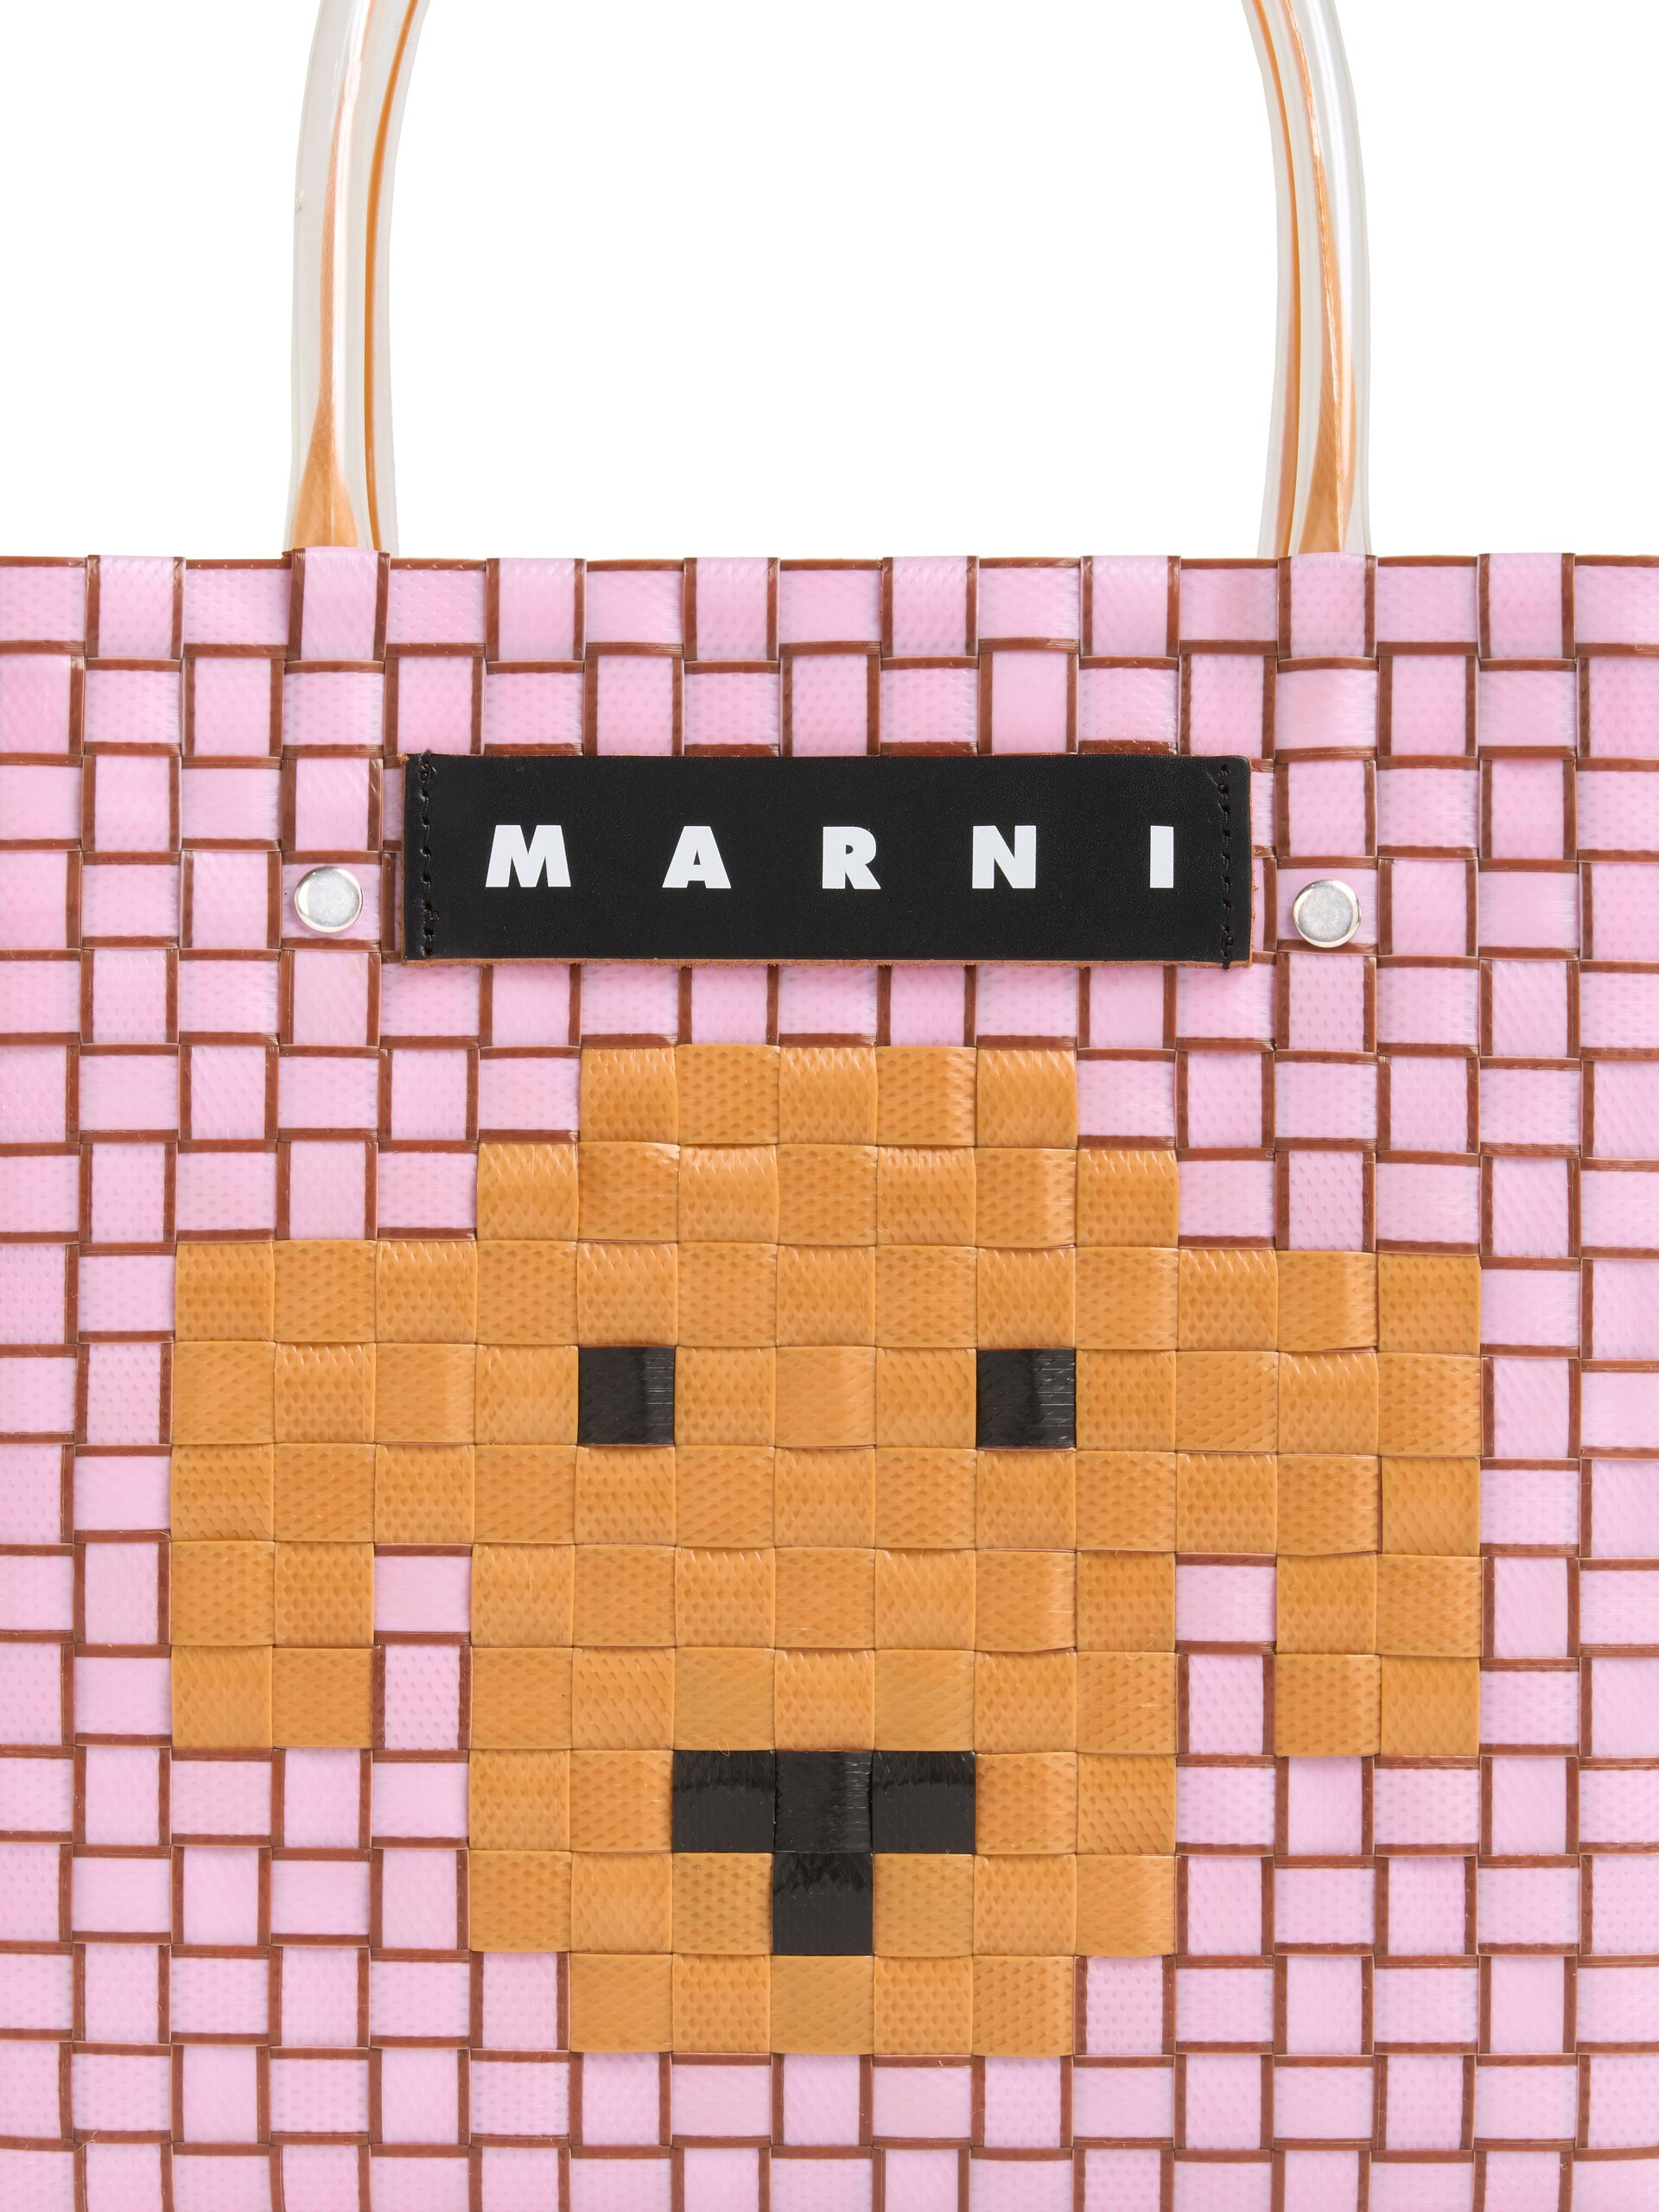 MARNI MARKET 라이트 핑크 ANIMAL BASKET 백 - 쇼핑백 - Image 4